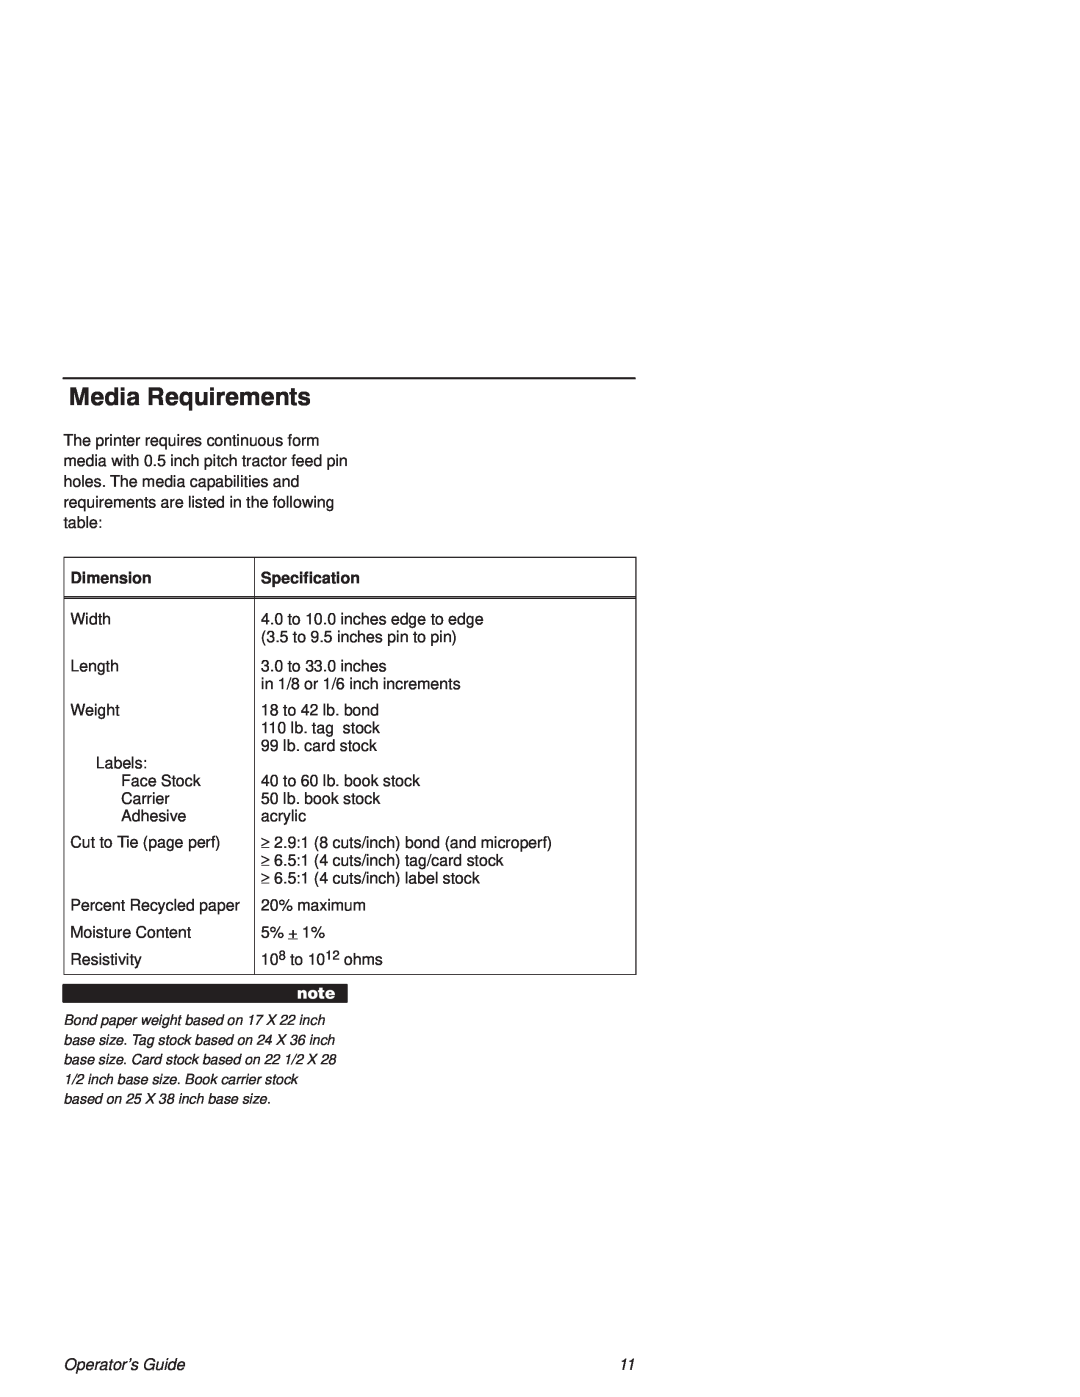 Printronix L1524 manual Media Requirements, Dimension, Specification, Operators Guide 